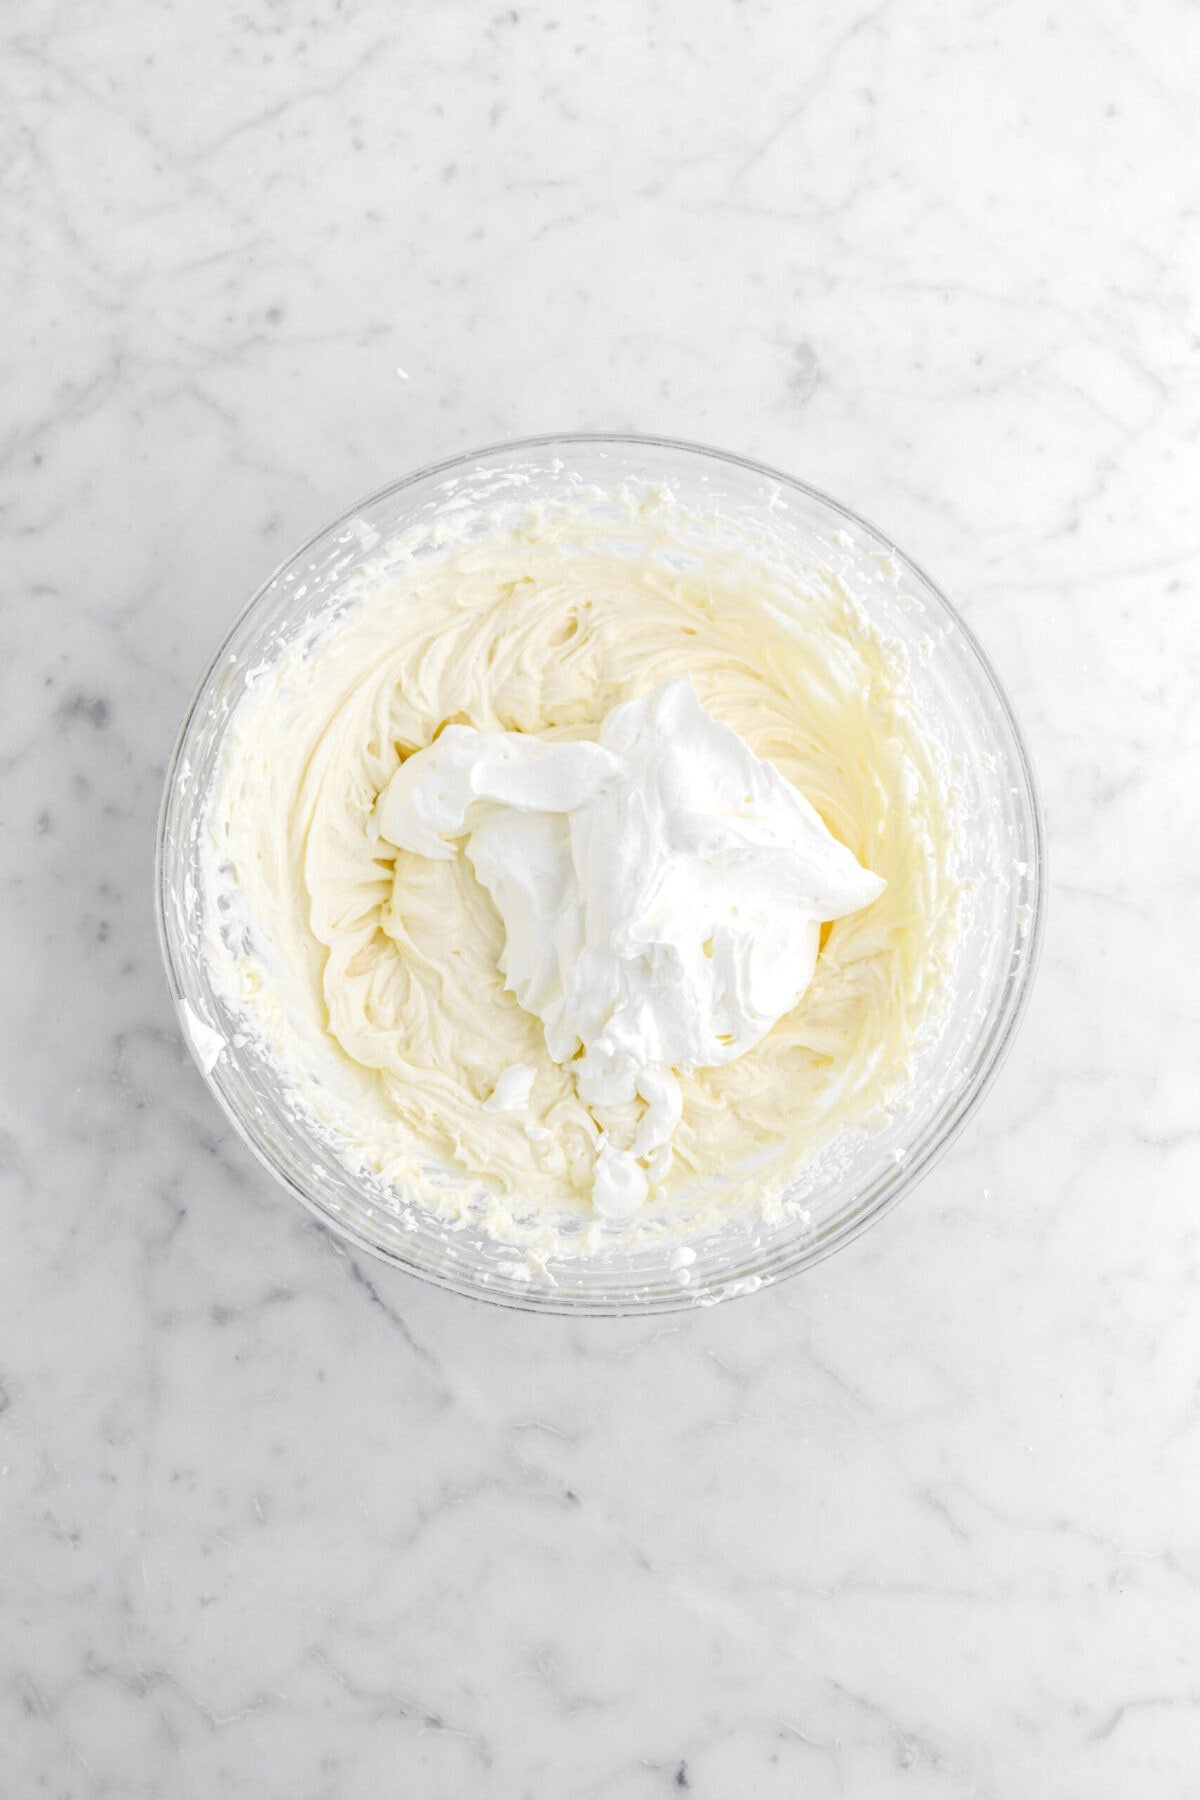 whipped cream added to cream cheese mixture.